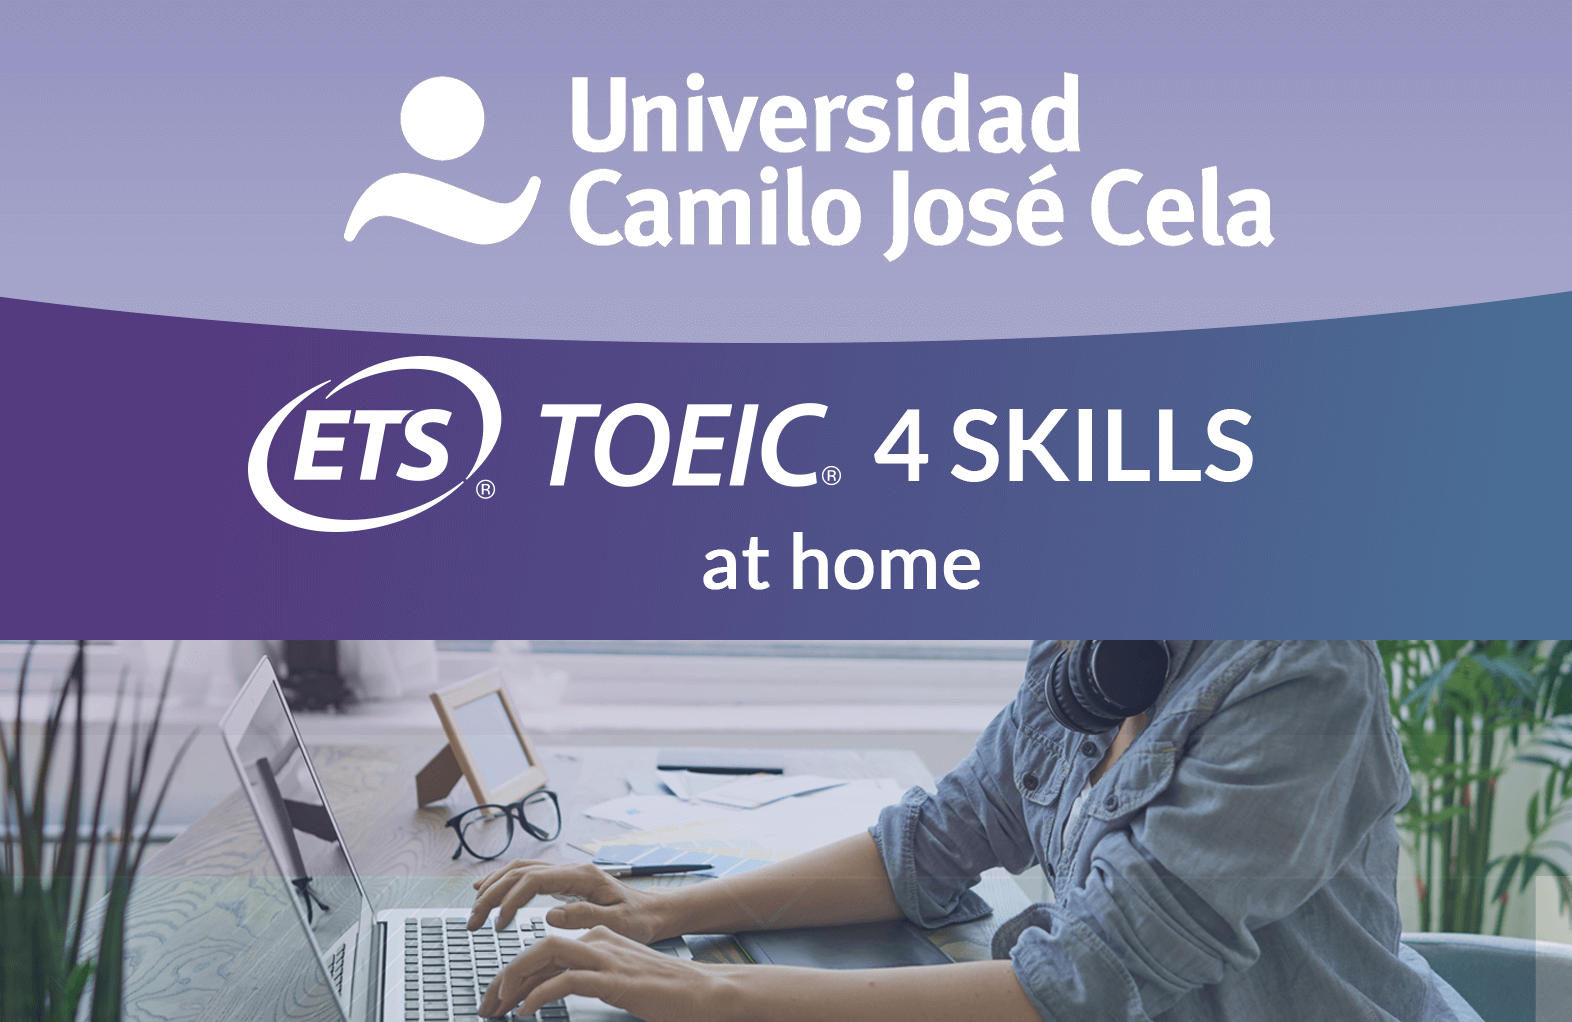 UCJC - TOEIC 4 Skills at home